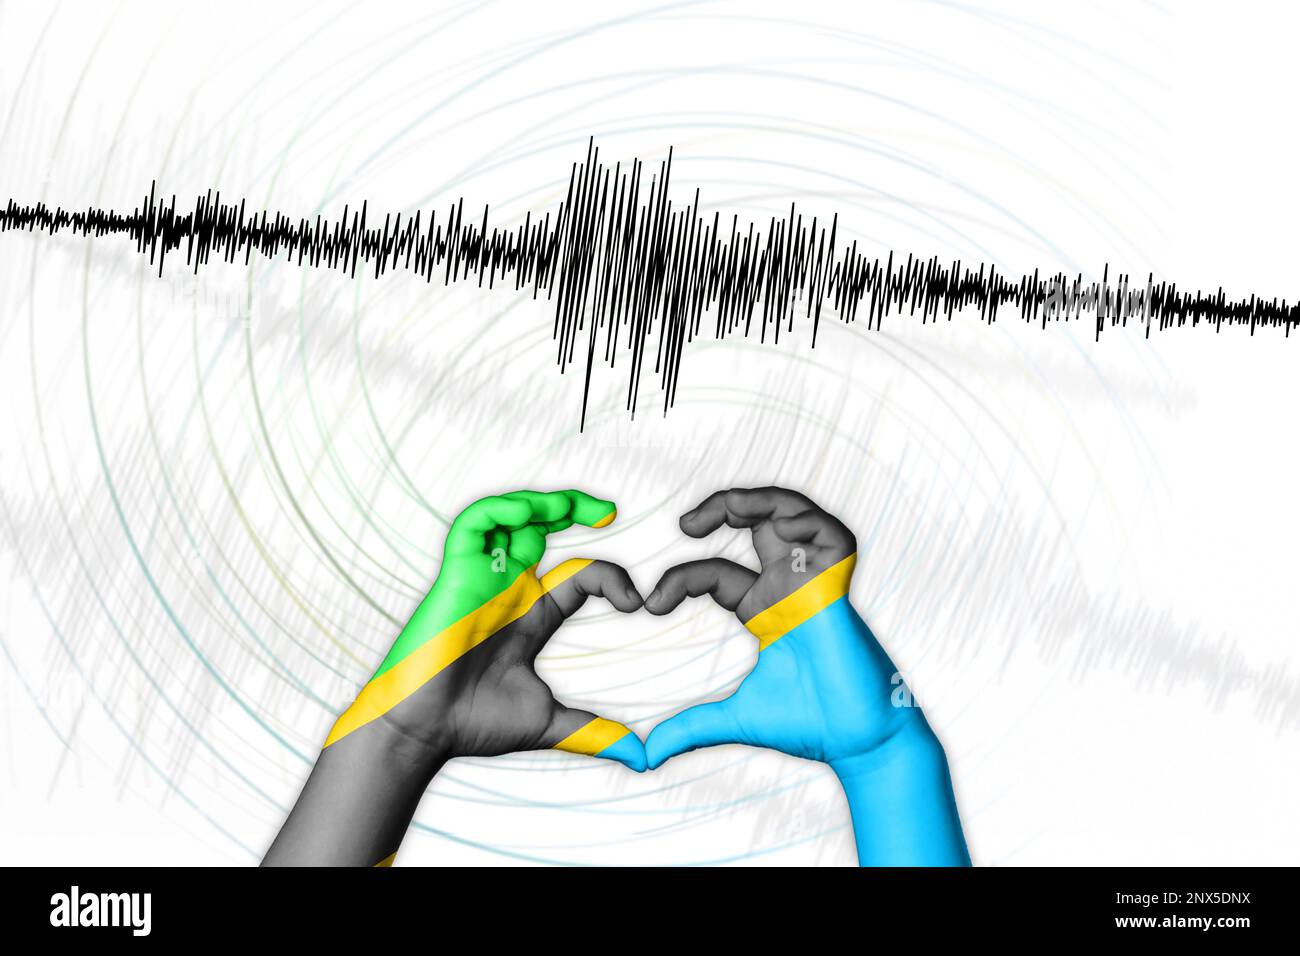 Erdbeben in Tansania Symbol der Heart Richter Scale Stockfoto